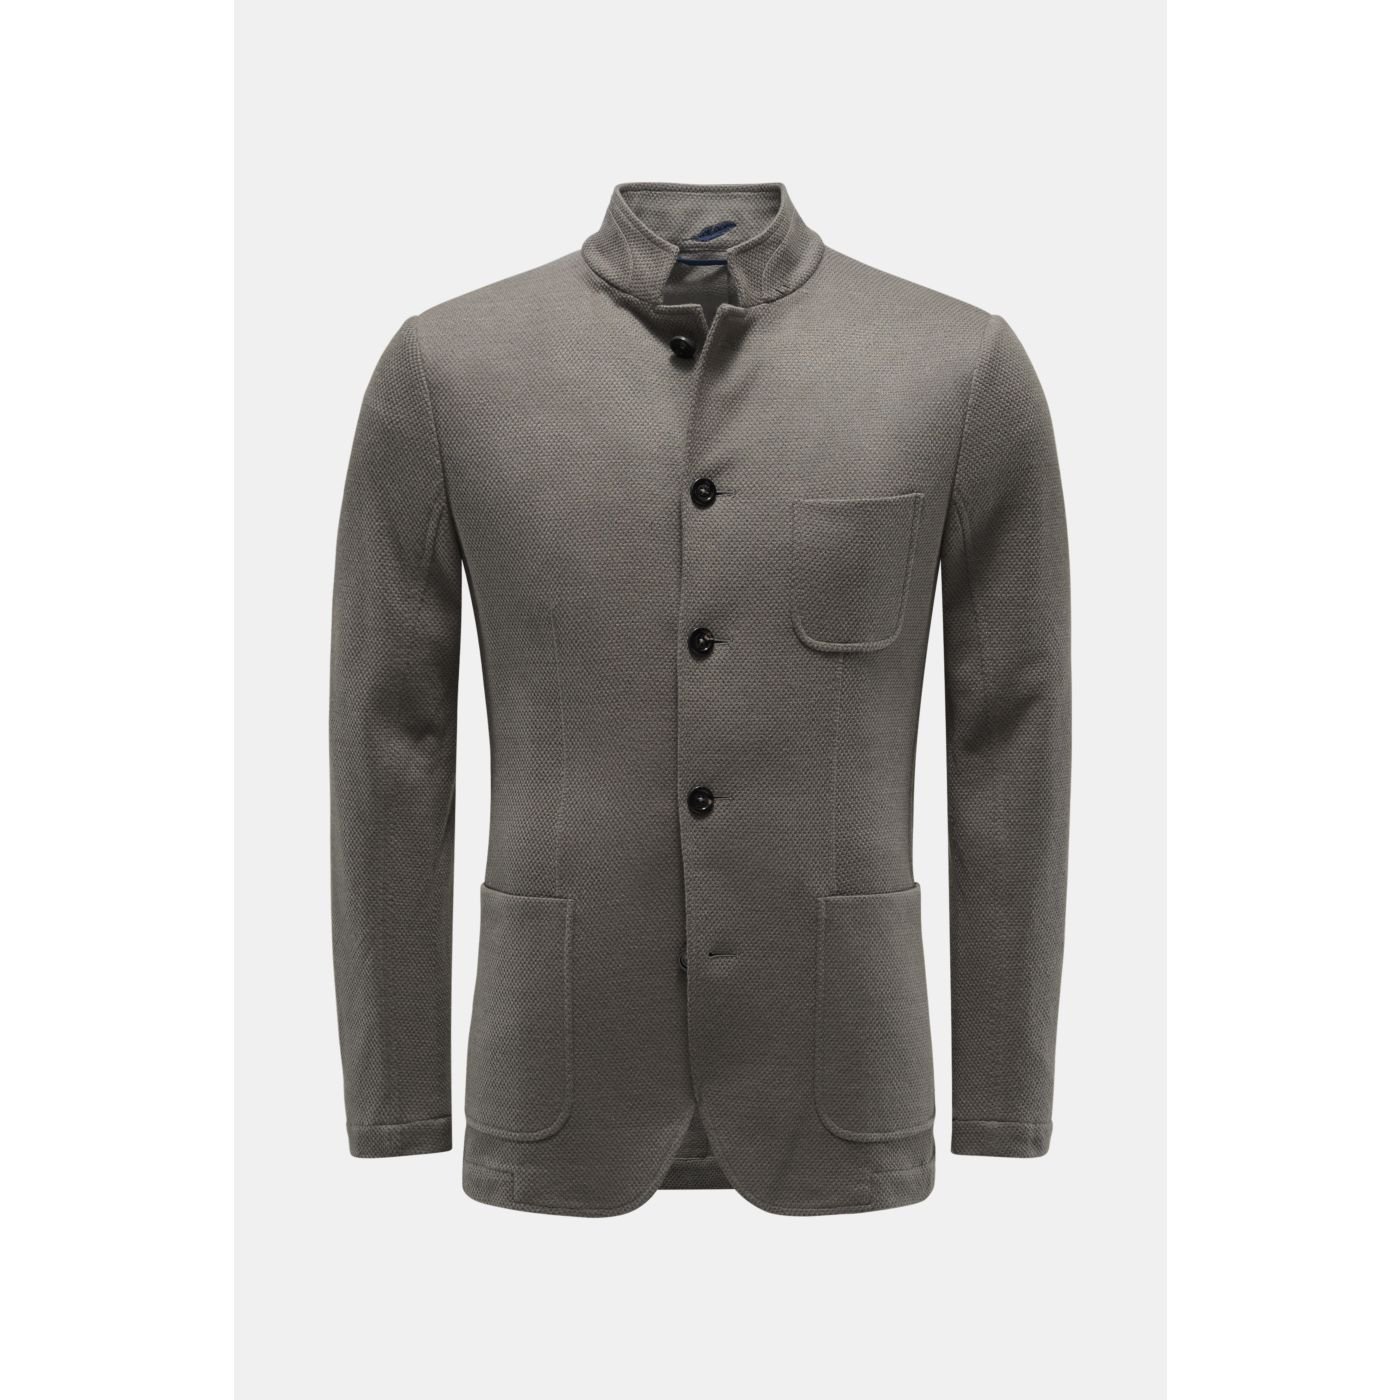 WEBER + WEBER smart-casual jacket grey | BRAUN Hamburg